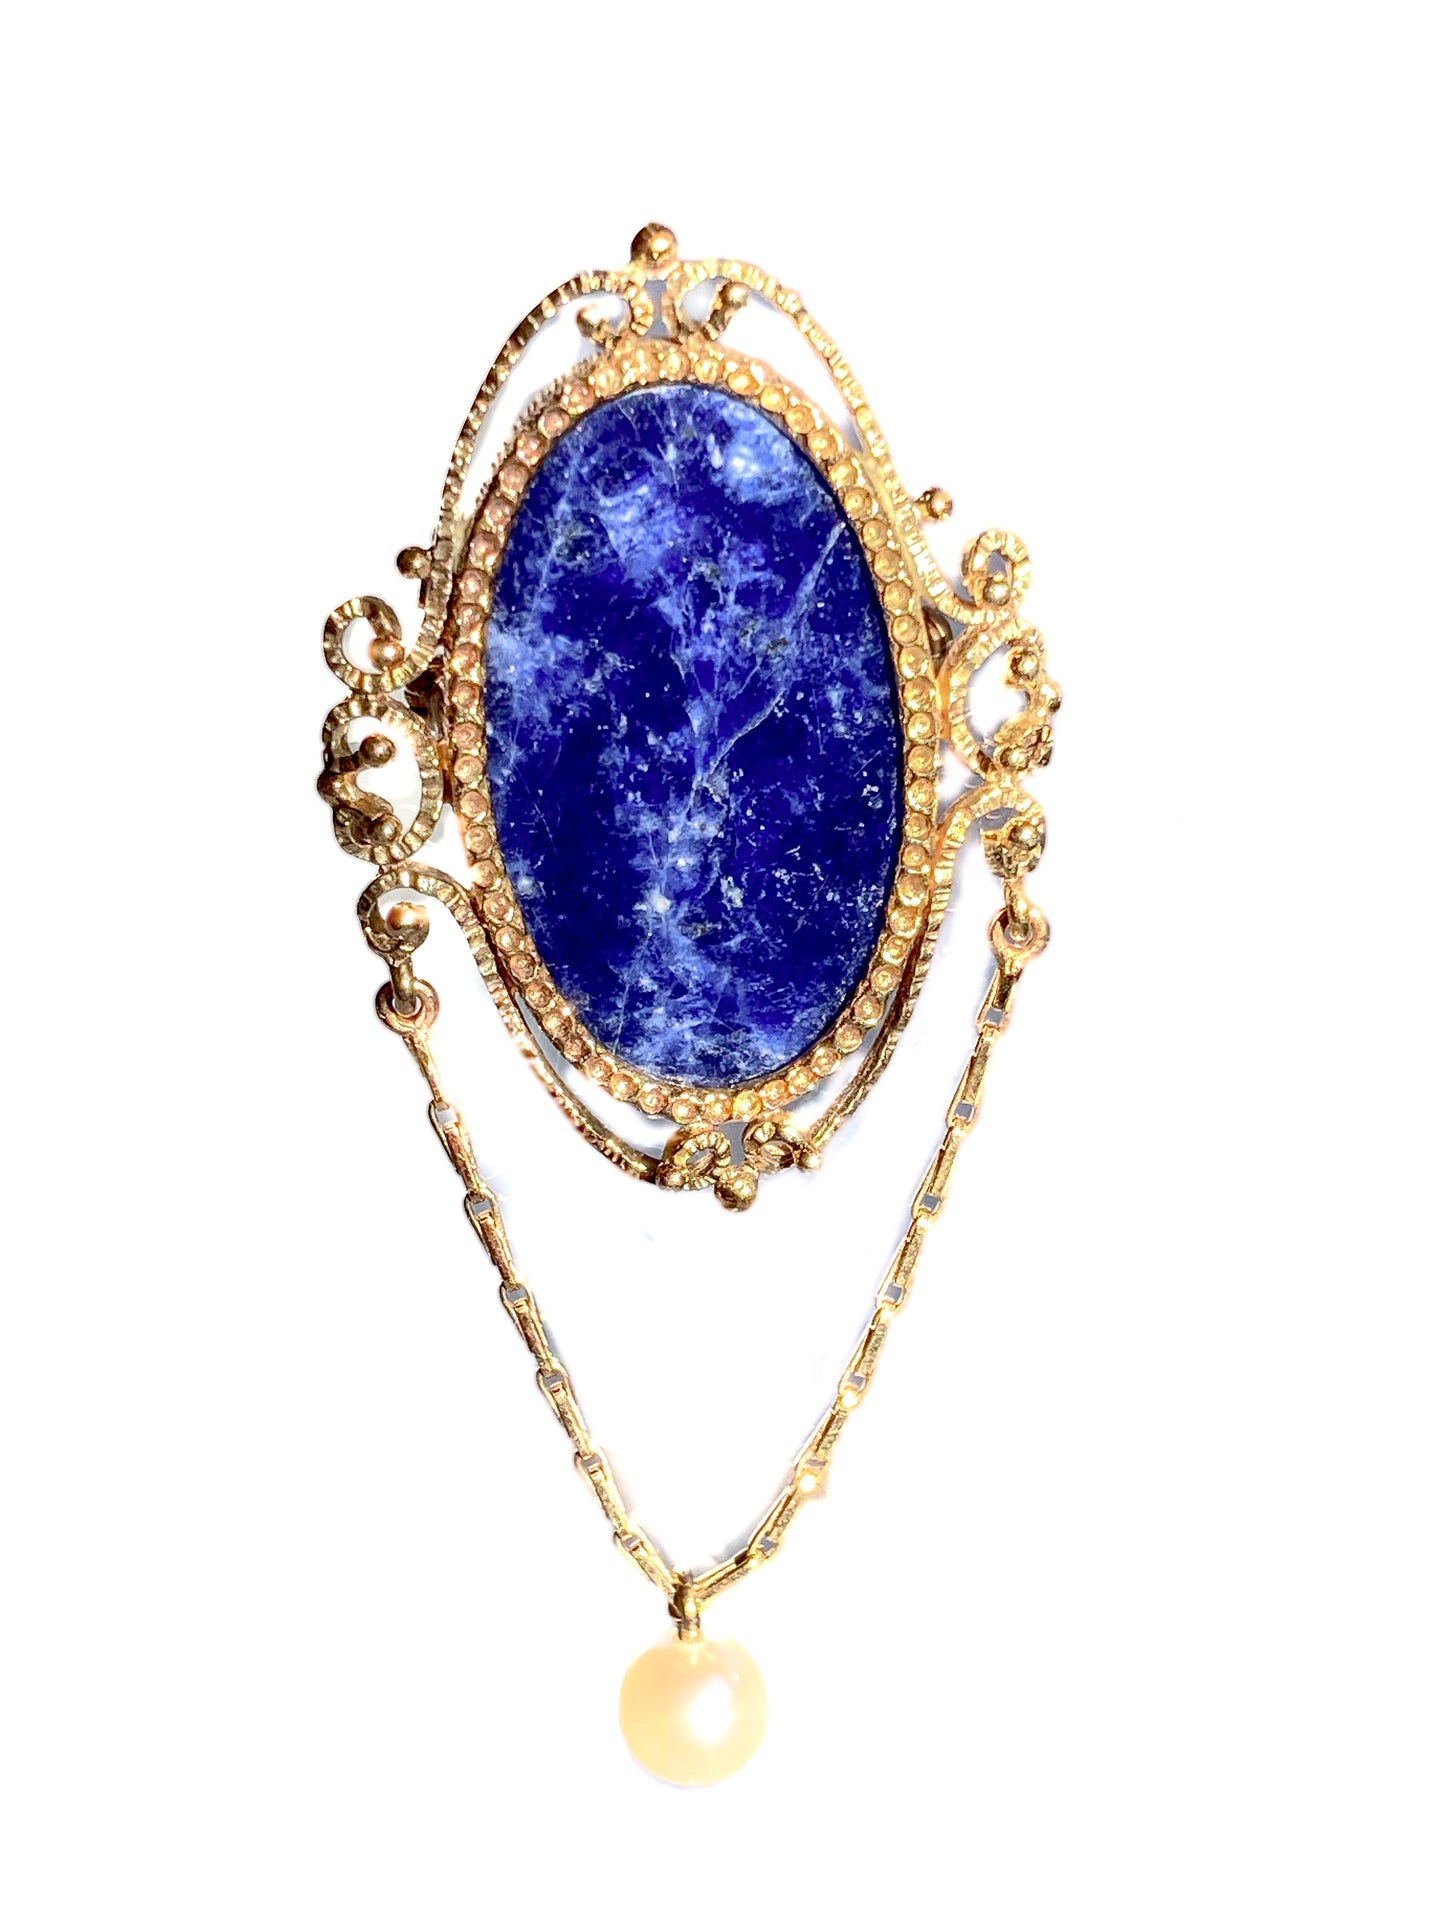 Vintage 14K Yellow Gold Filigree Oval Lapis Lazuli Pearl Dangle Brooch Pin